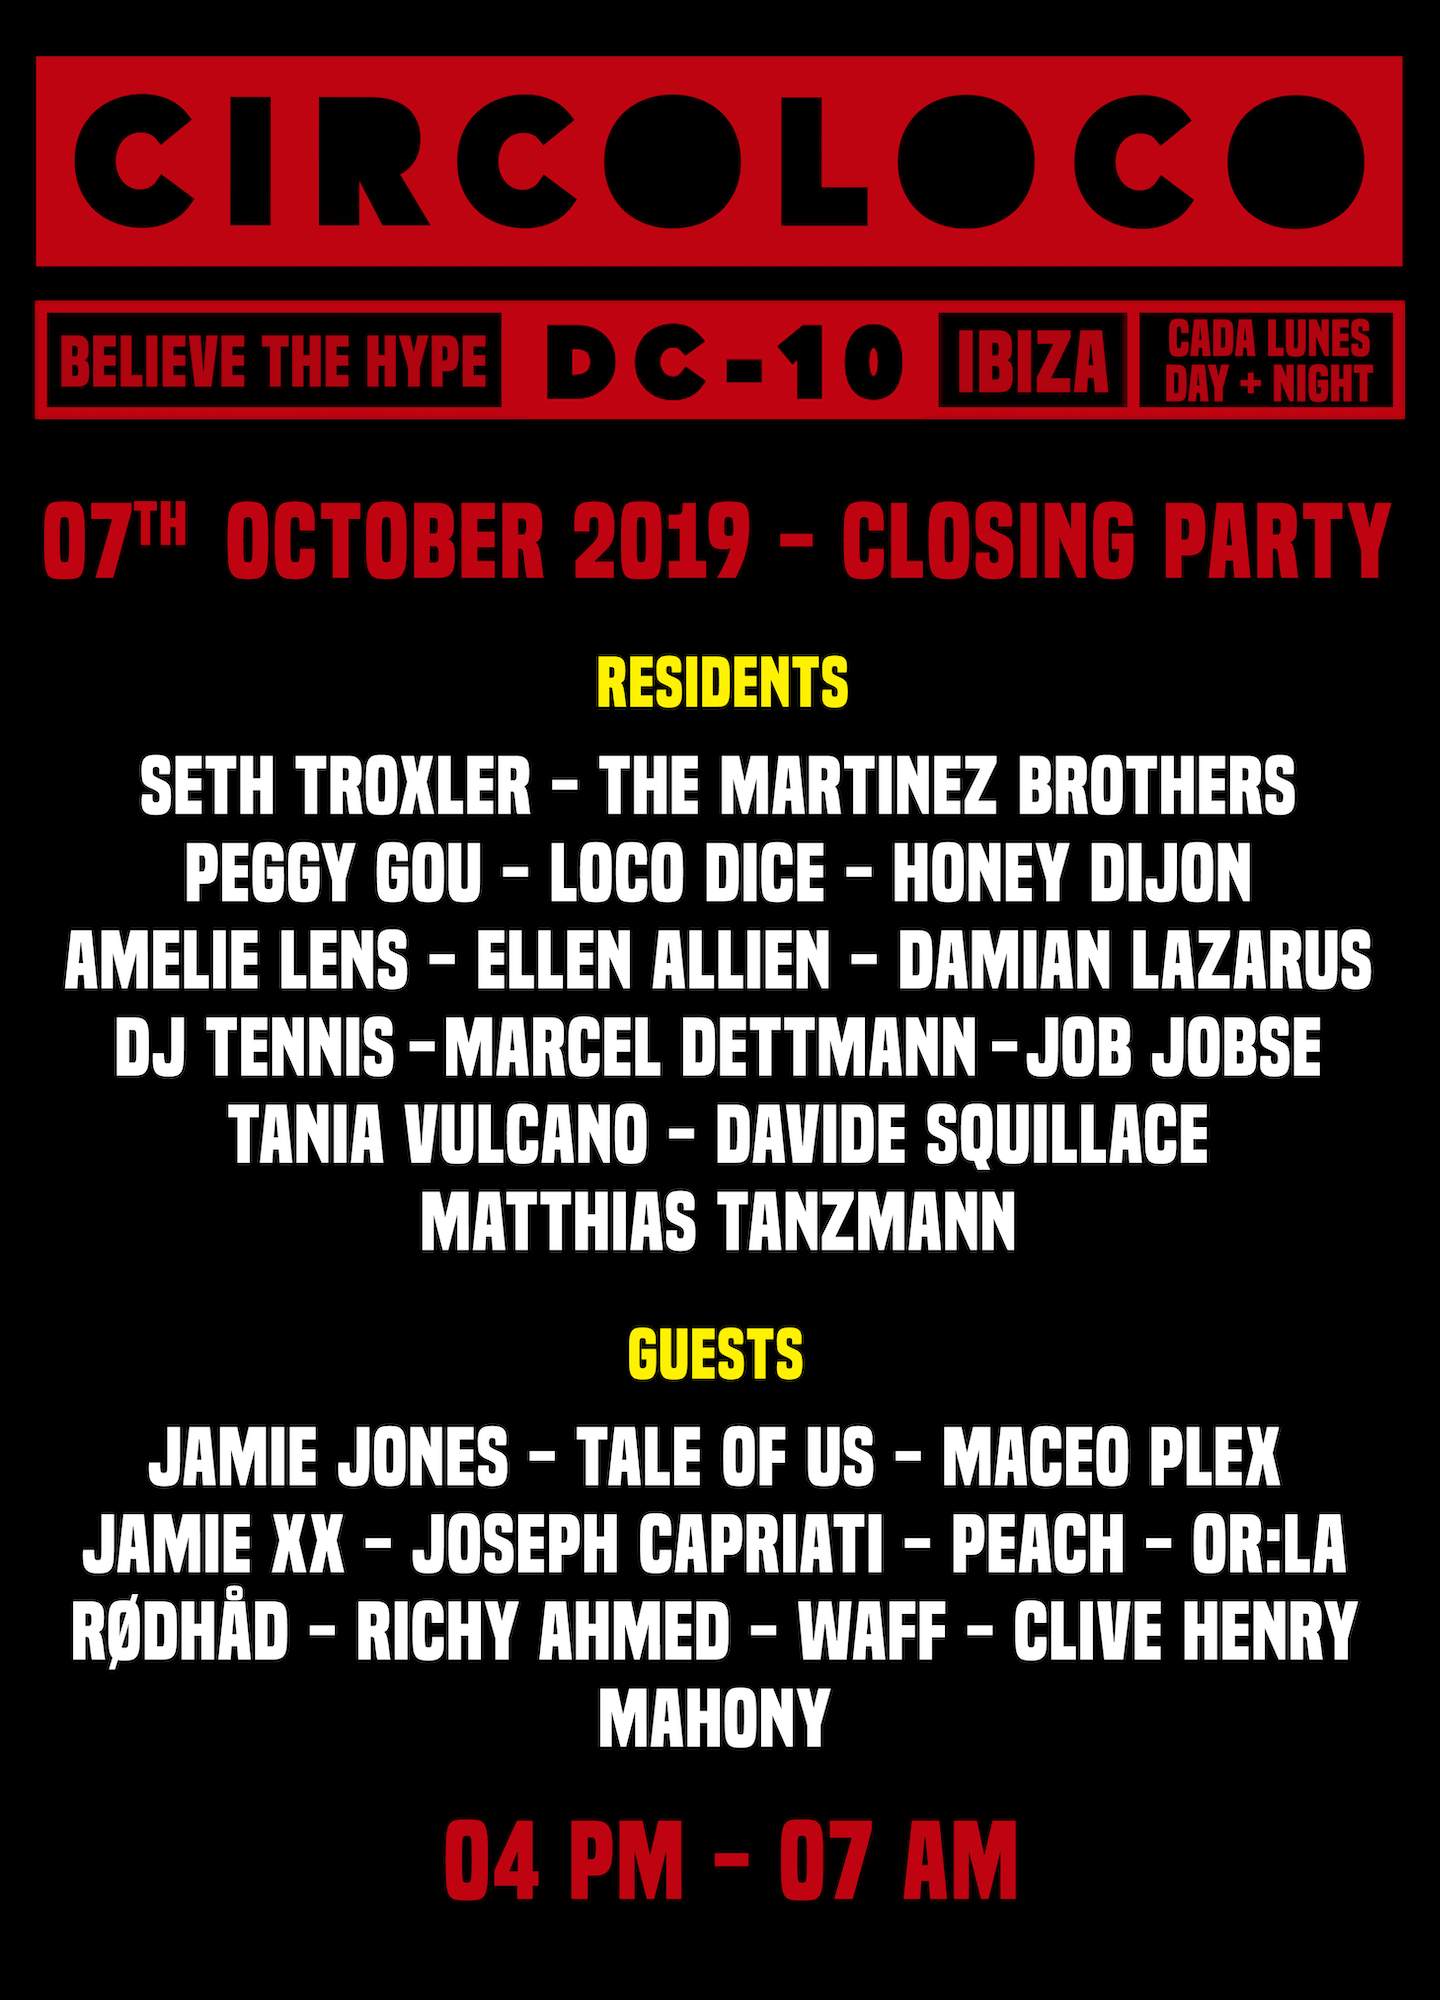 Circoloco Ibiza reveals closing party lineup image